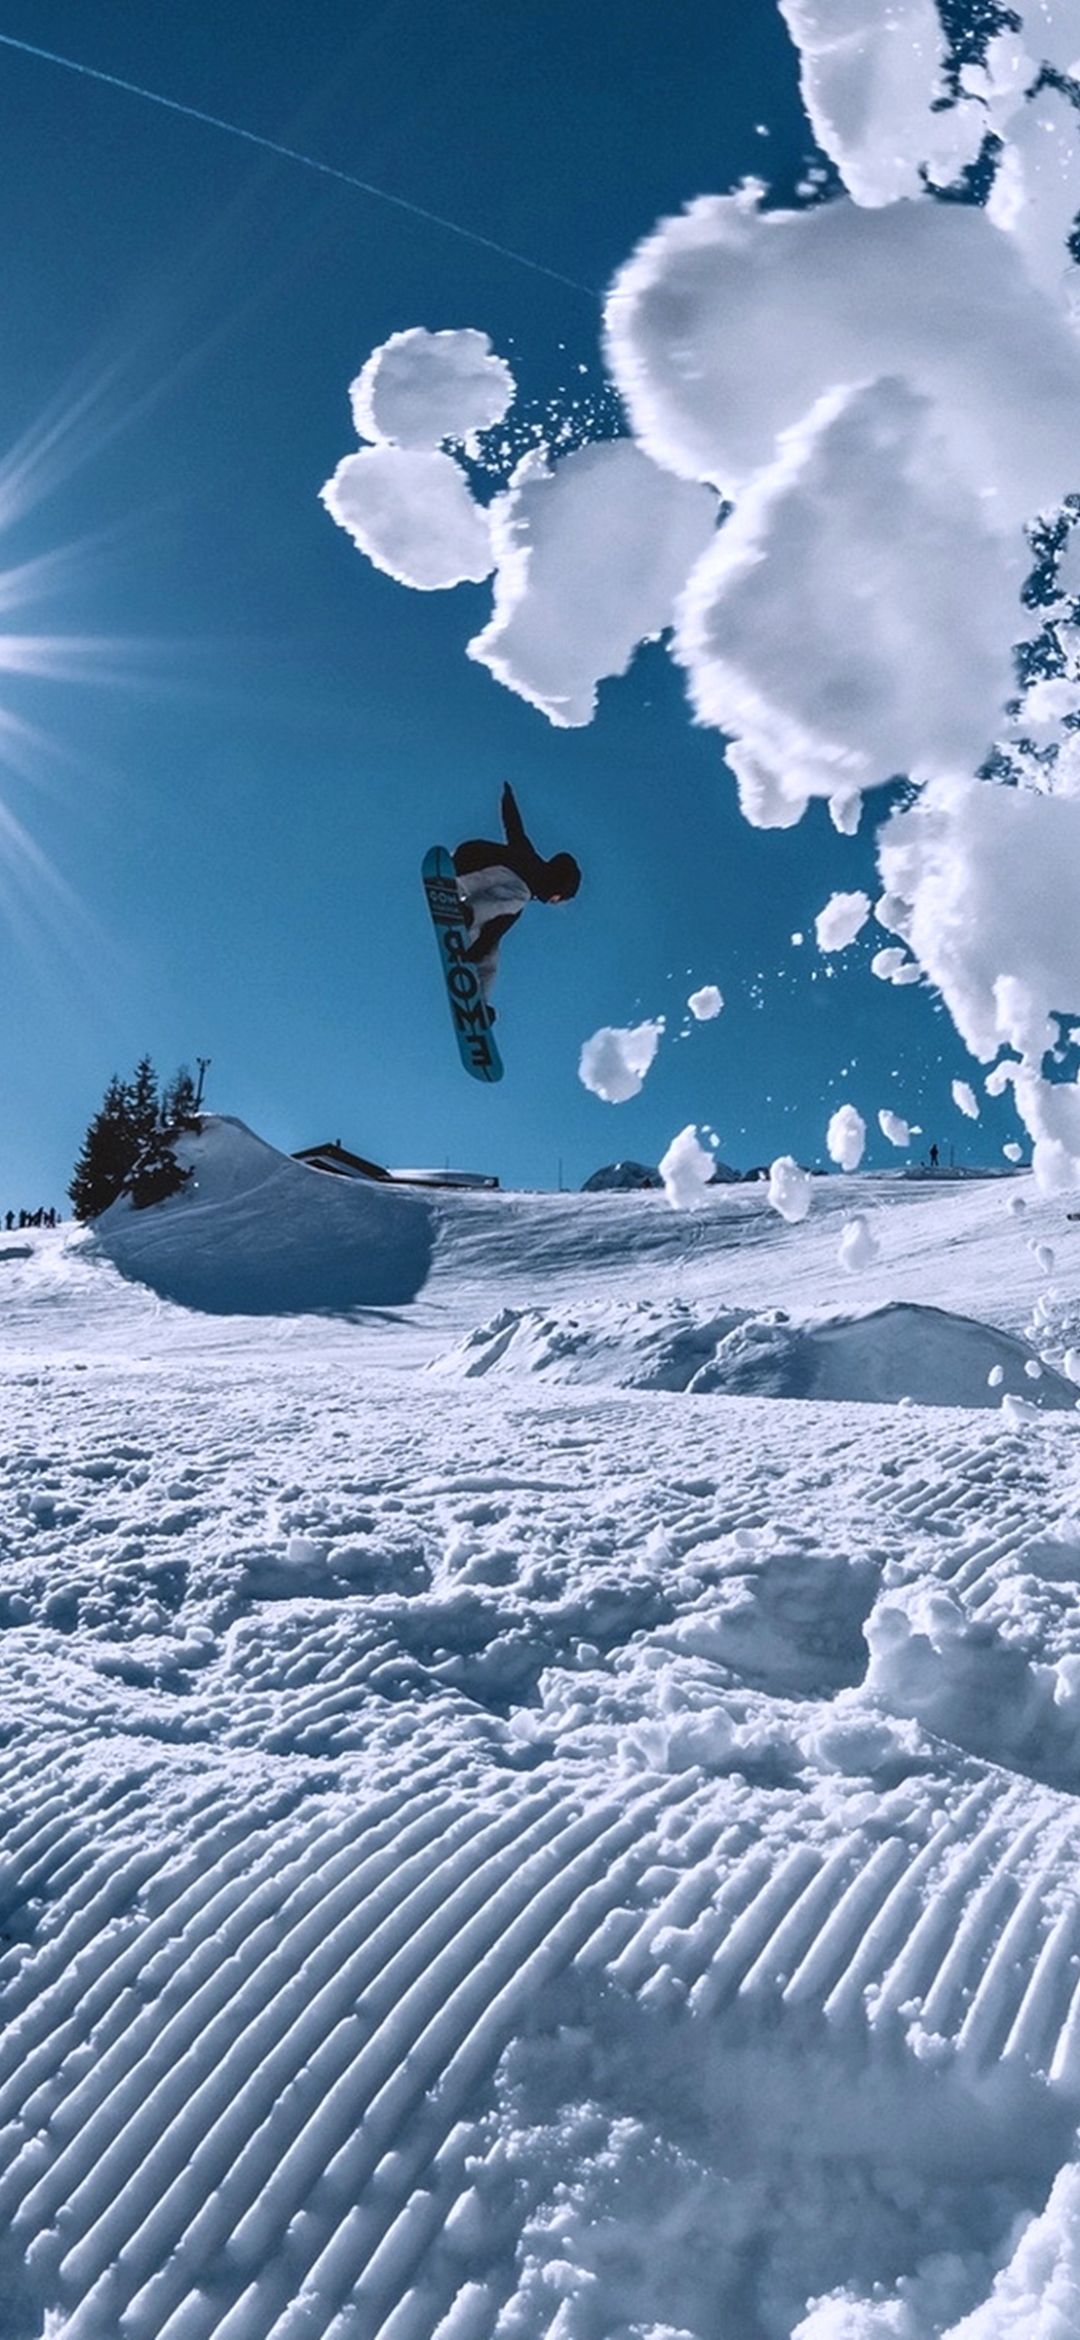 32k Wallpaper Snowboarding 